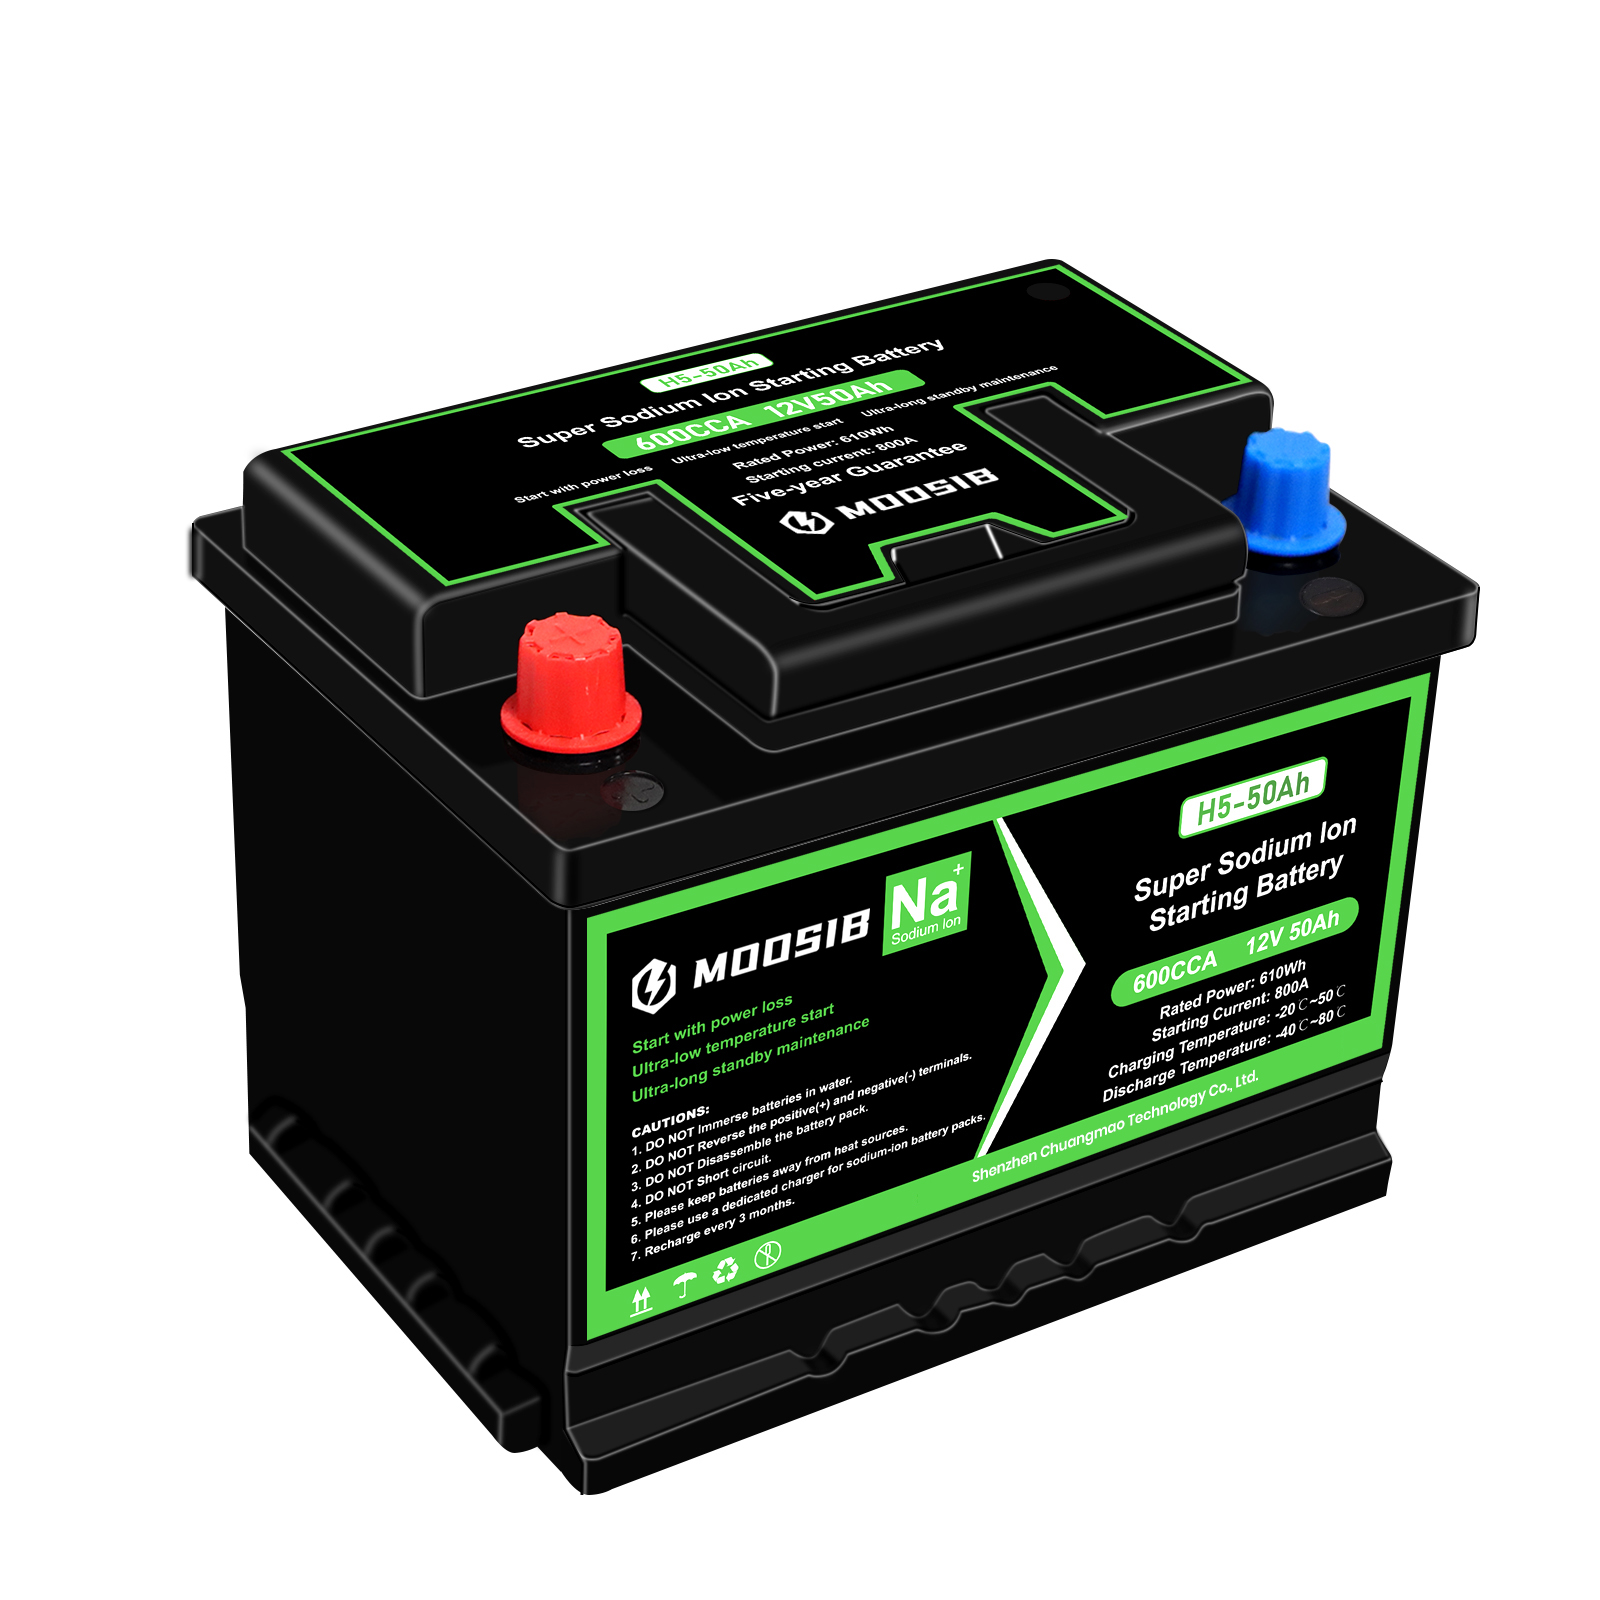 MOOSIB 12V 50Ah 610Wh Sodium lon Starting Battery